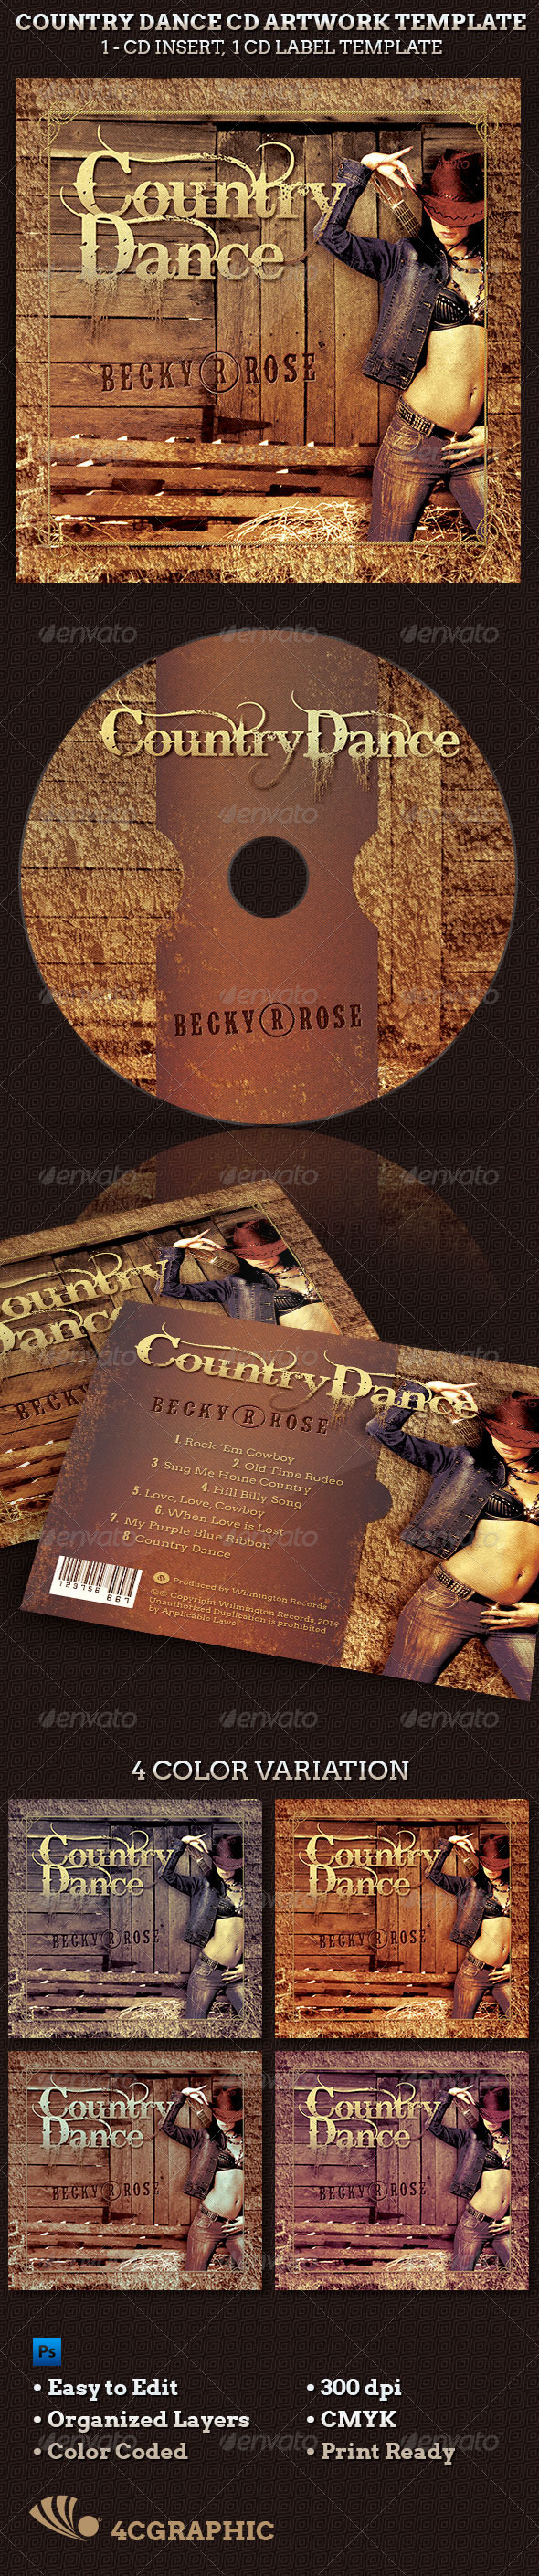 Country Dance Music CD Artwork Template